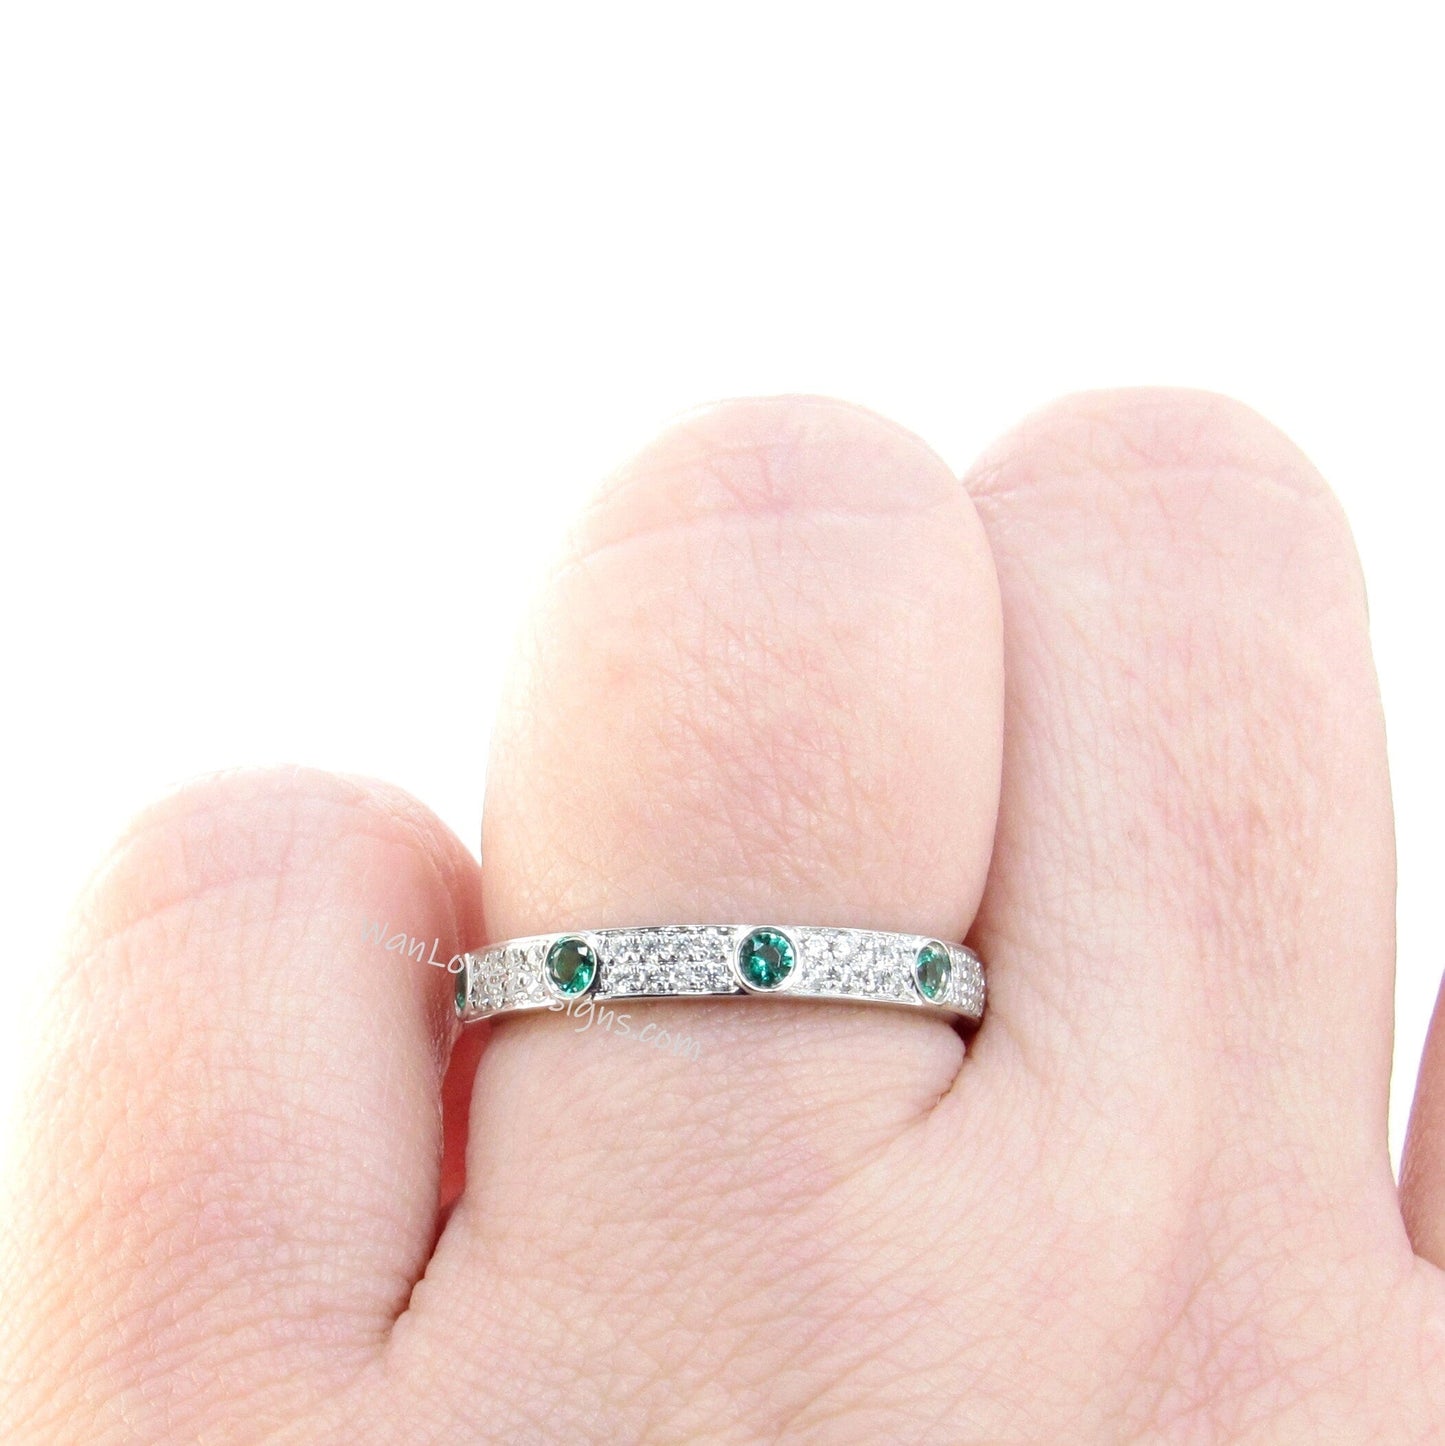 Green Emerald White Moissanite Wedding Band Ring white gold gemstone ring round bezel 7 gem stone Engagement Anniversary band Ready to ship Wan Love Designs